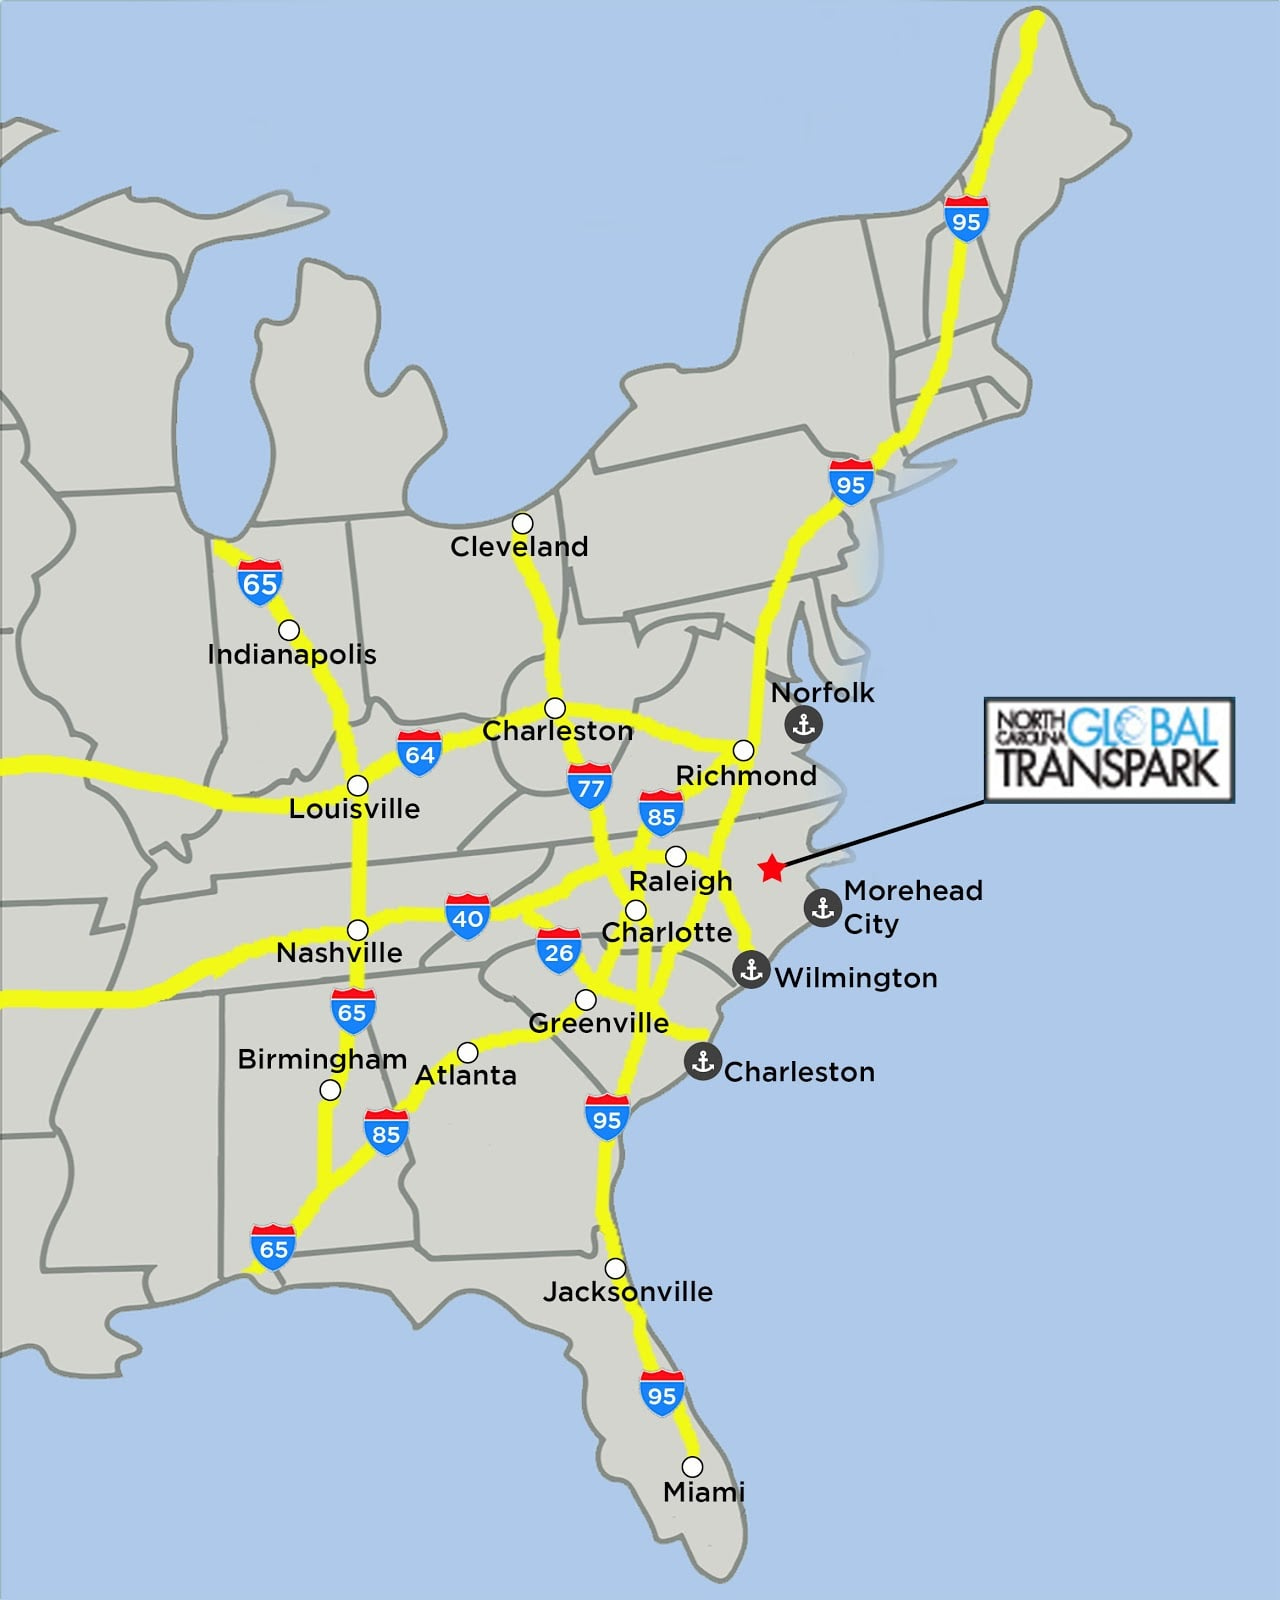 North Carolina Global Transpark Maps 1 